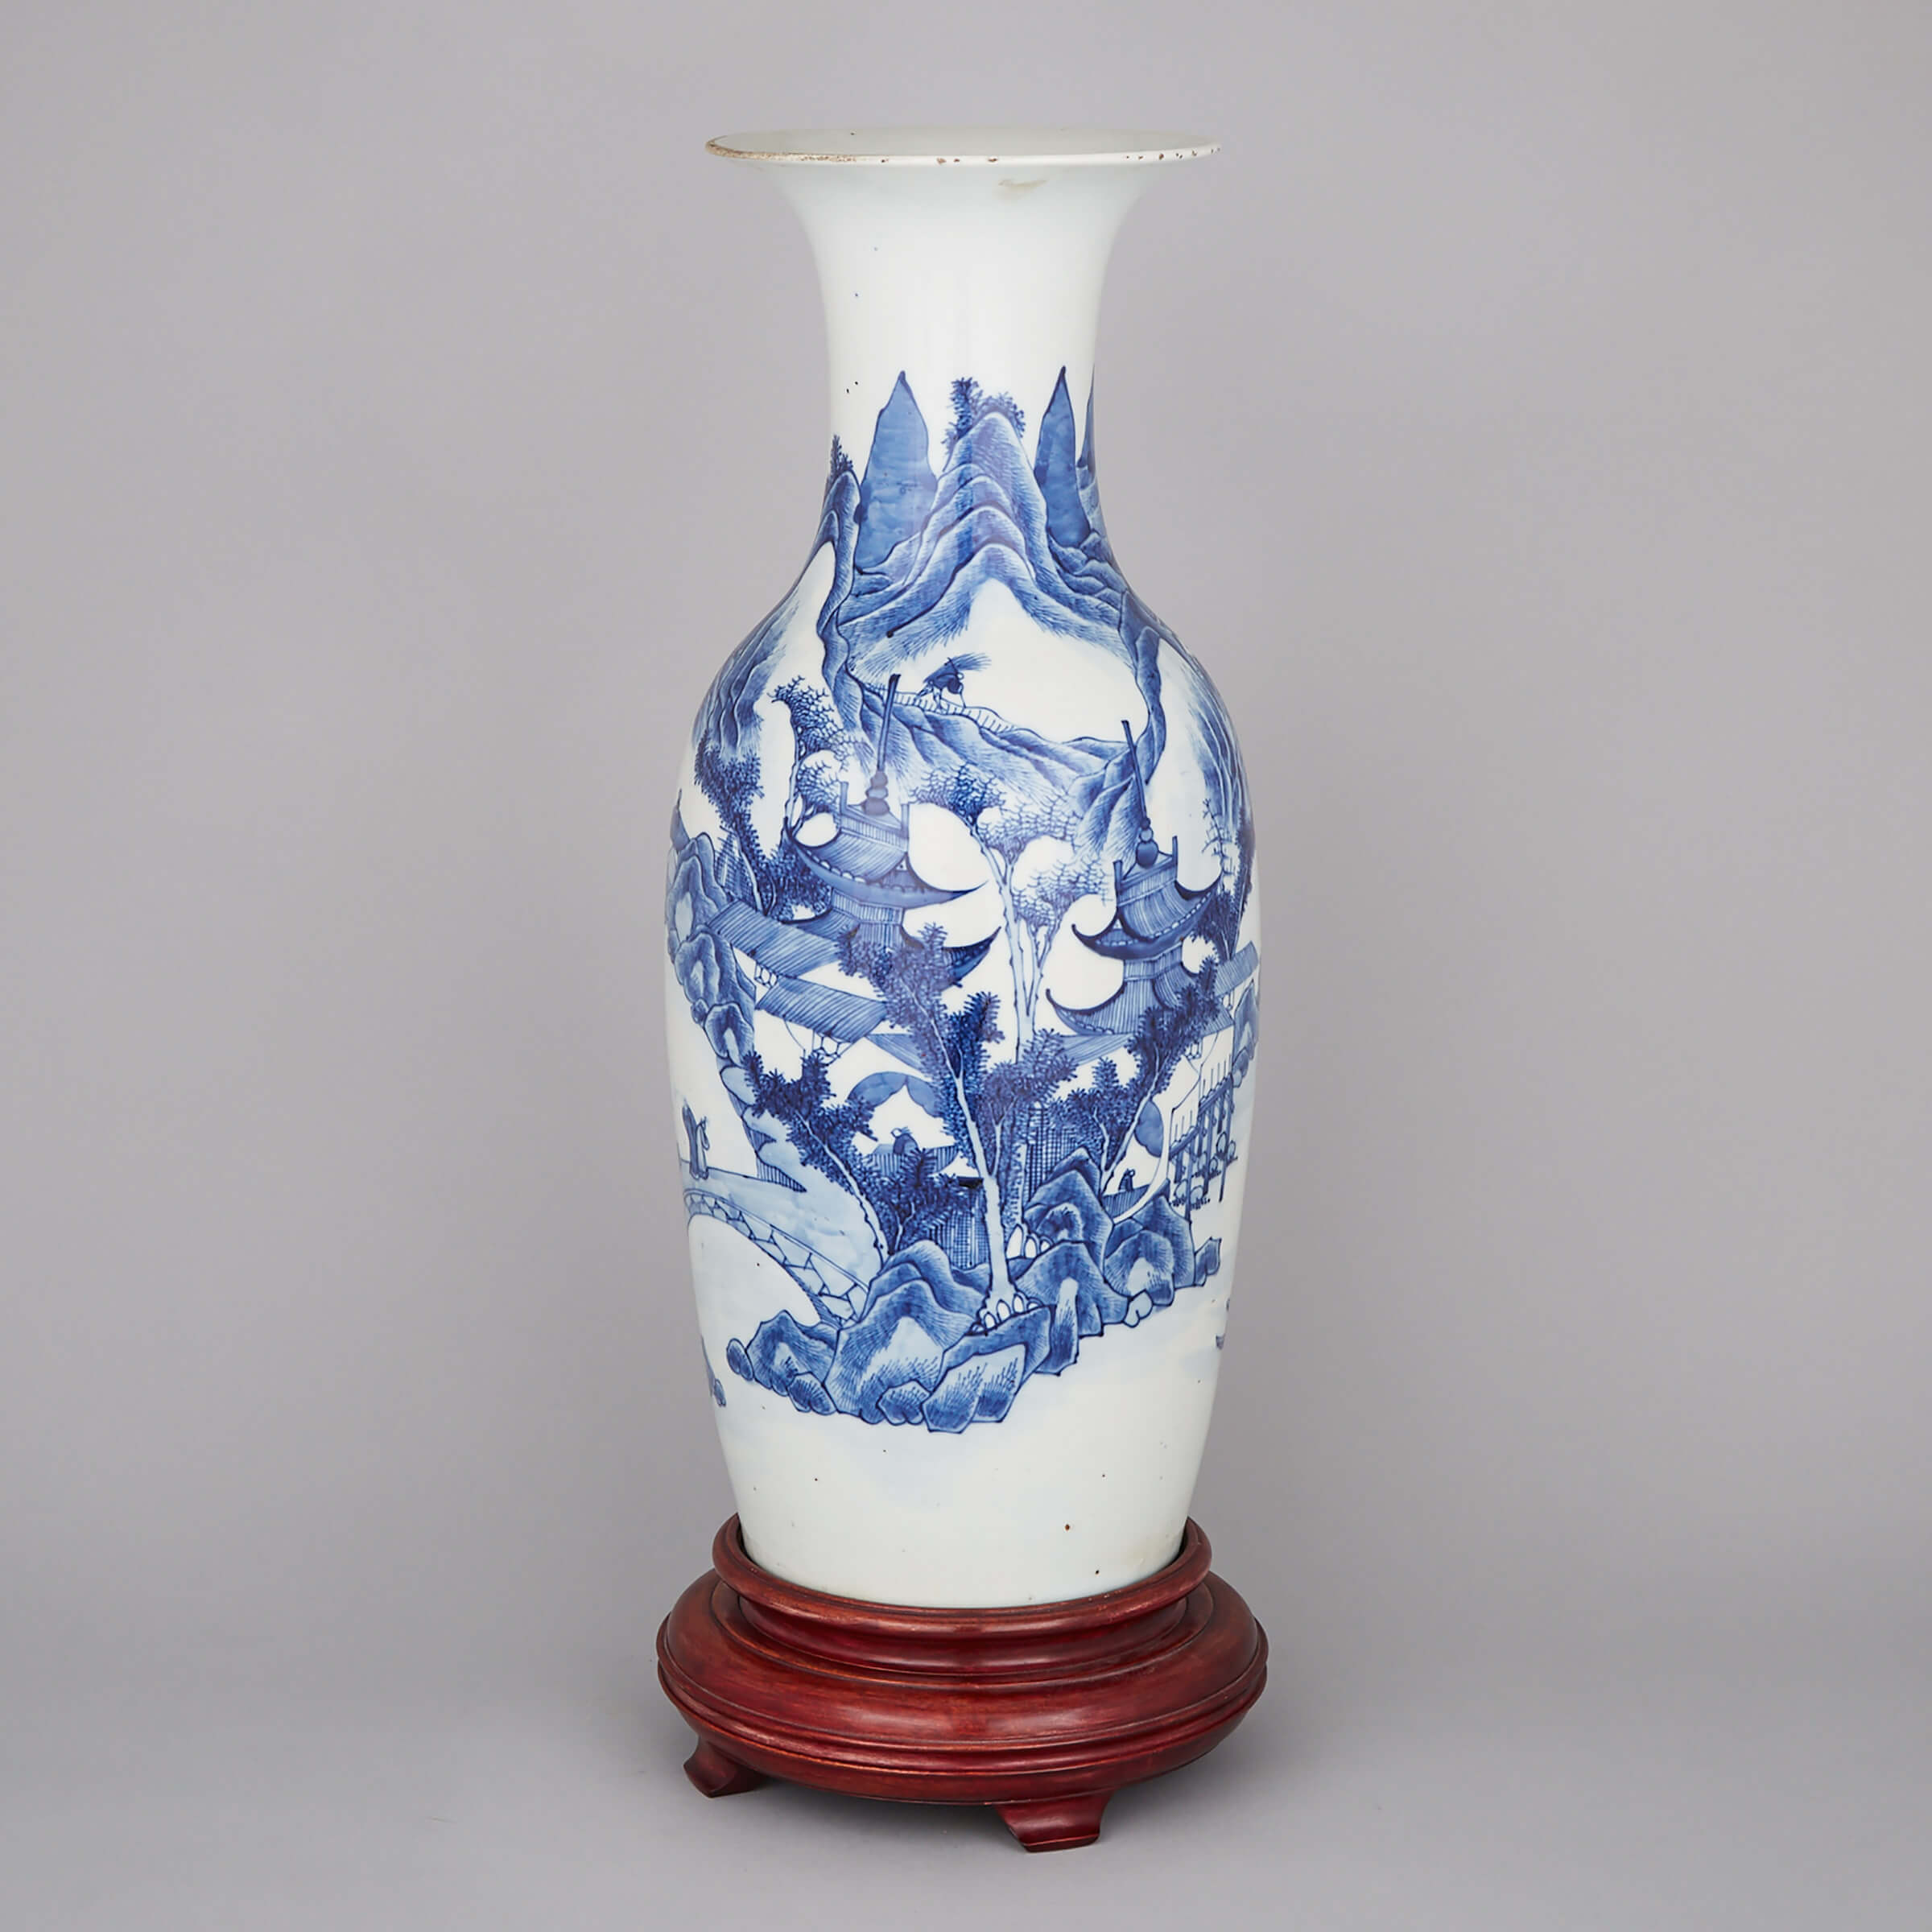 A Large Blue and White Landscape Vase